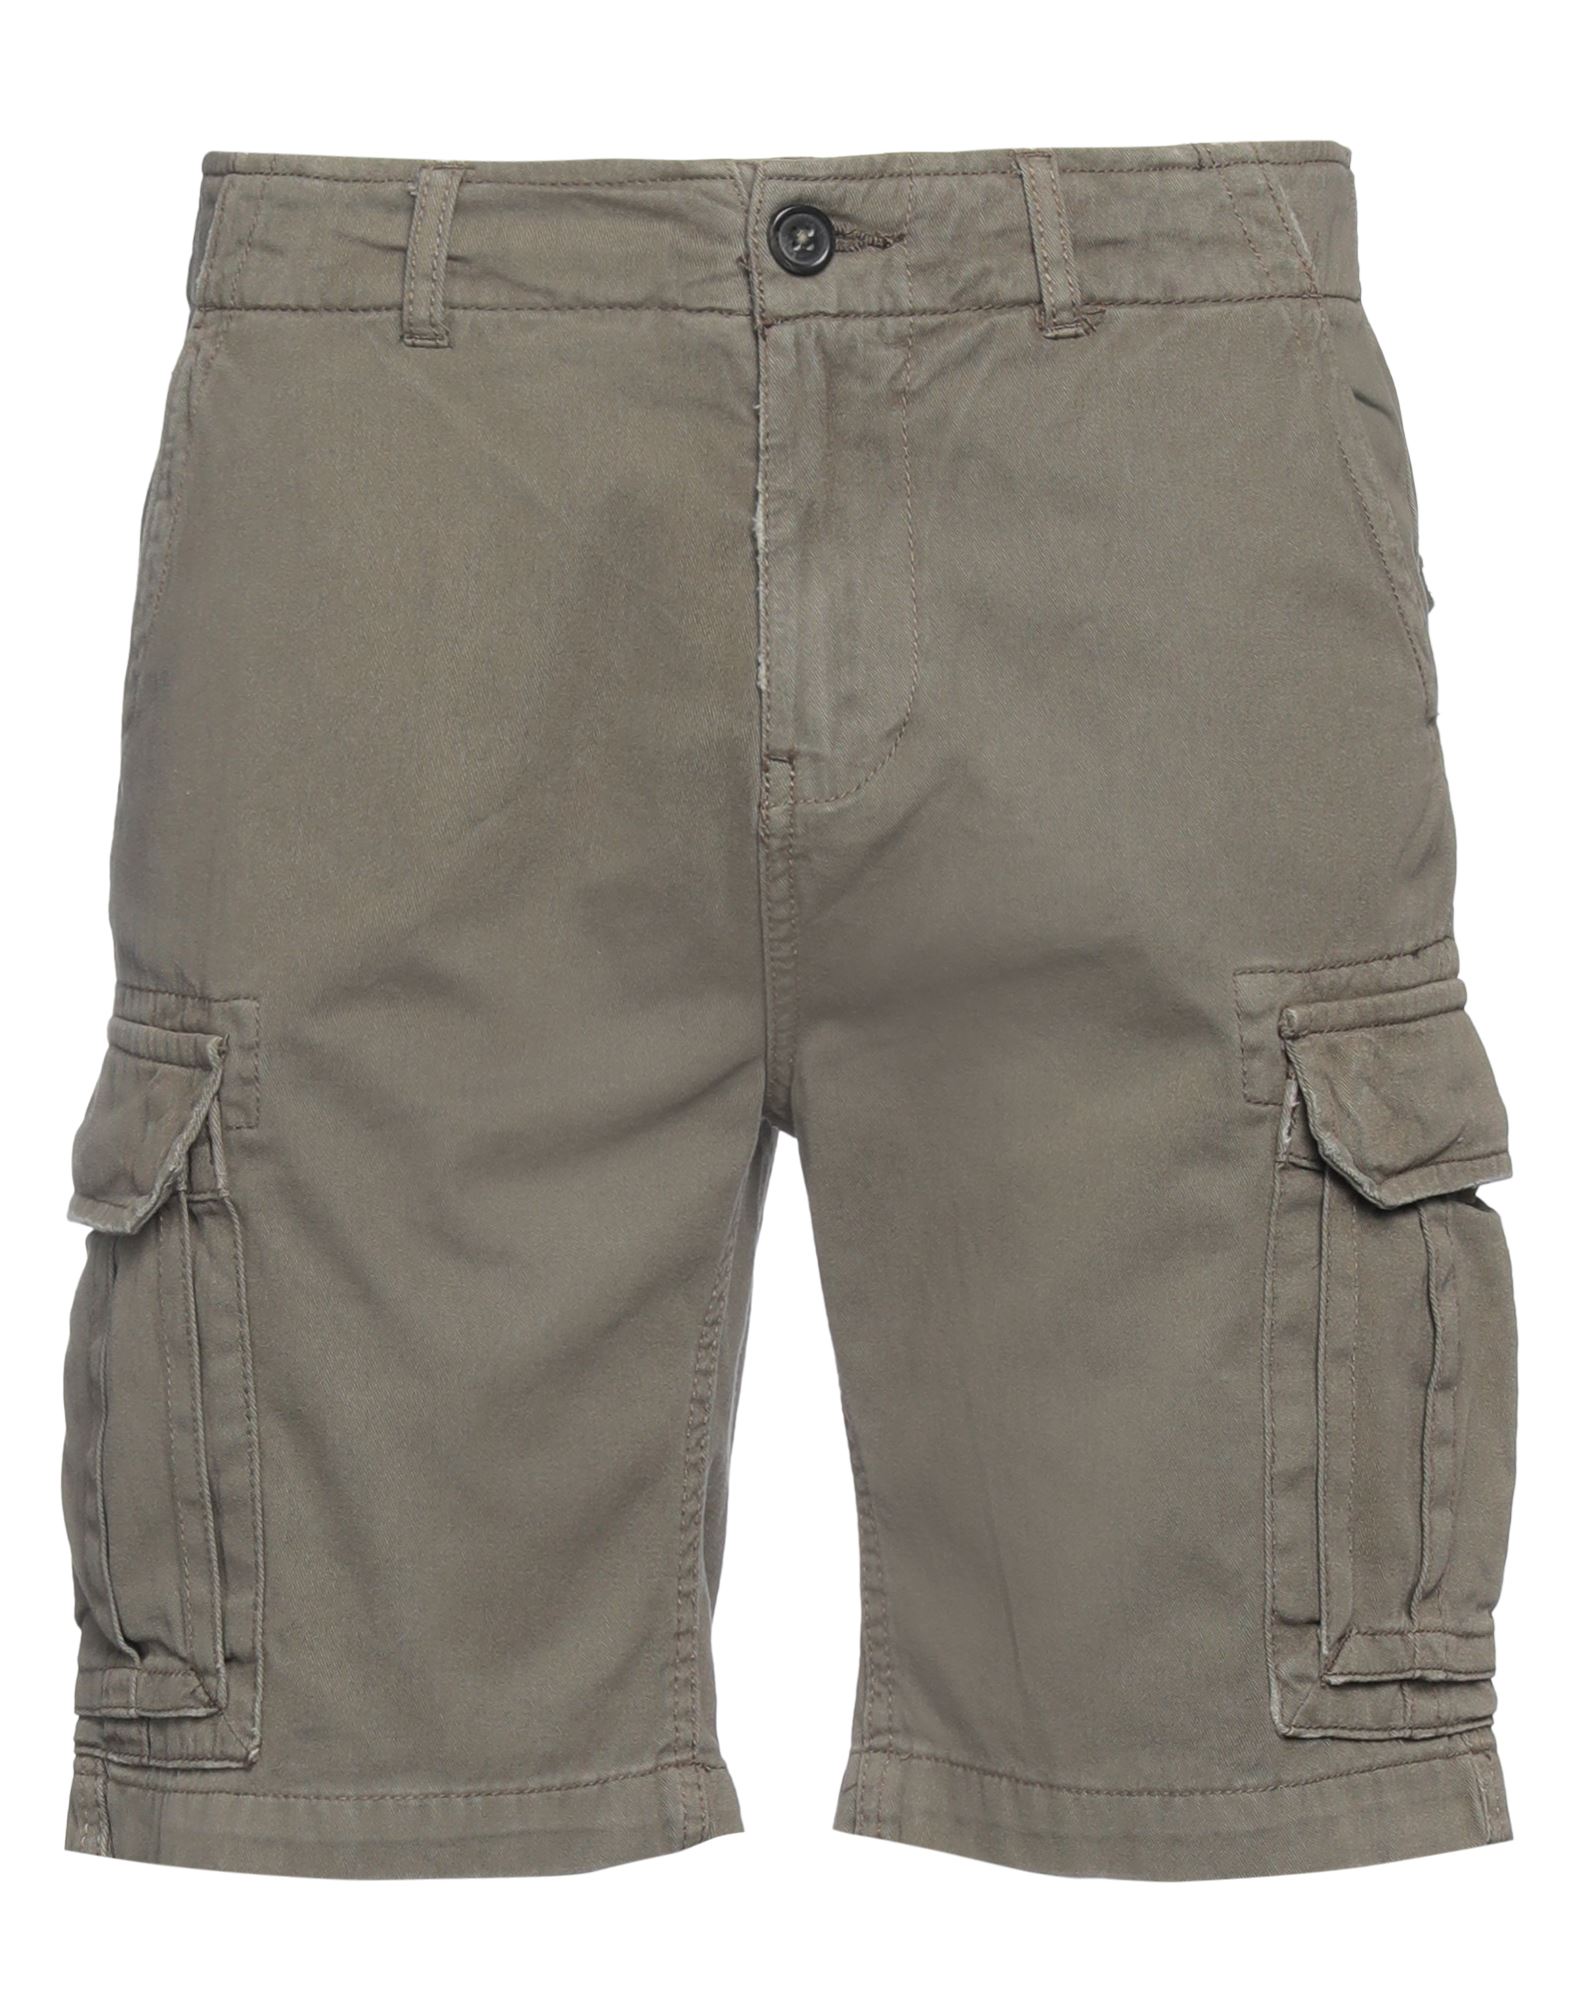 Minimum Man Shorts & Bermuda Shorts Military Green Size Xs Cotton